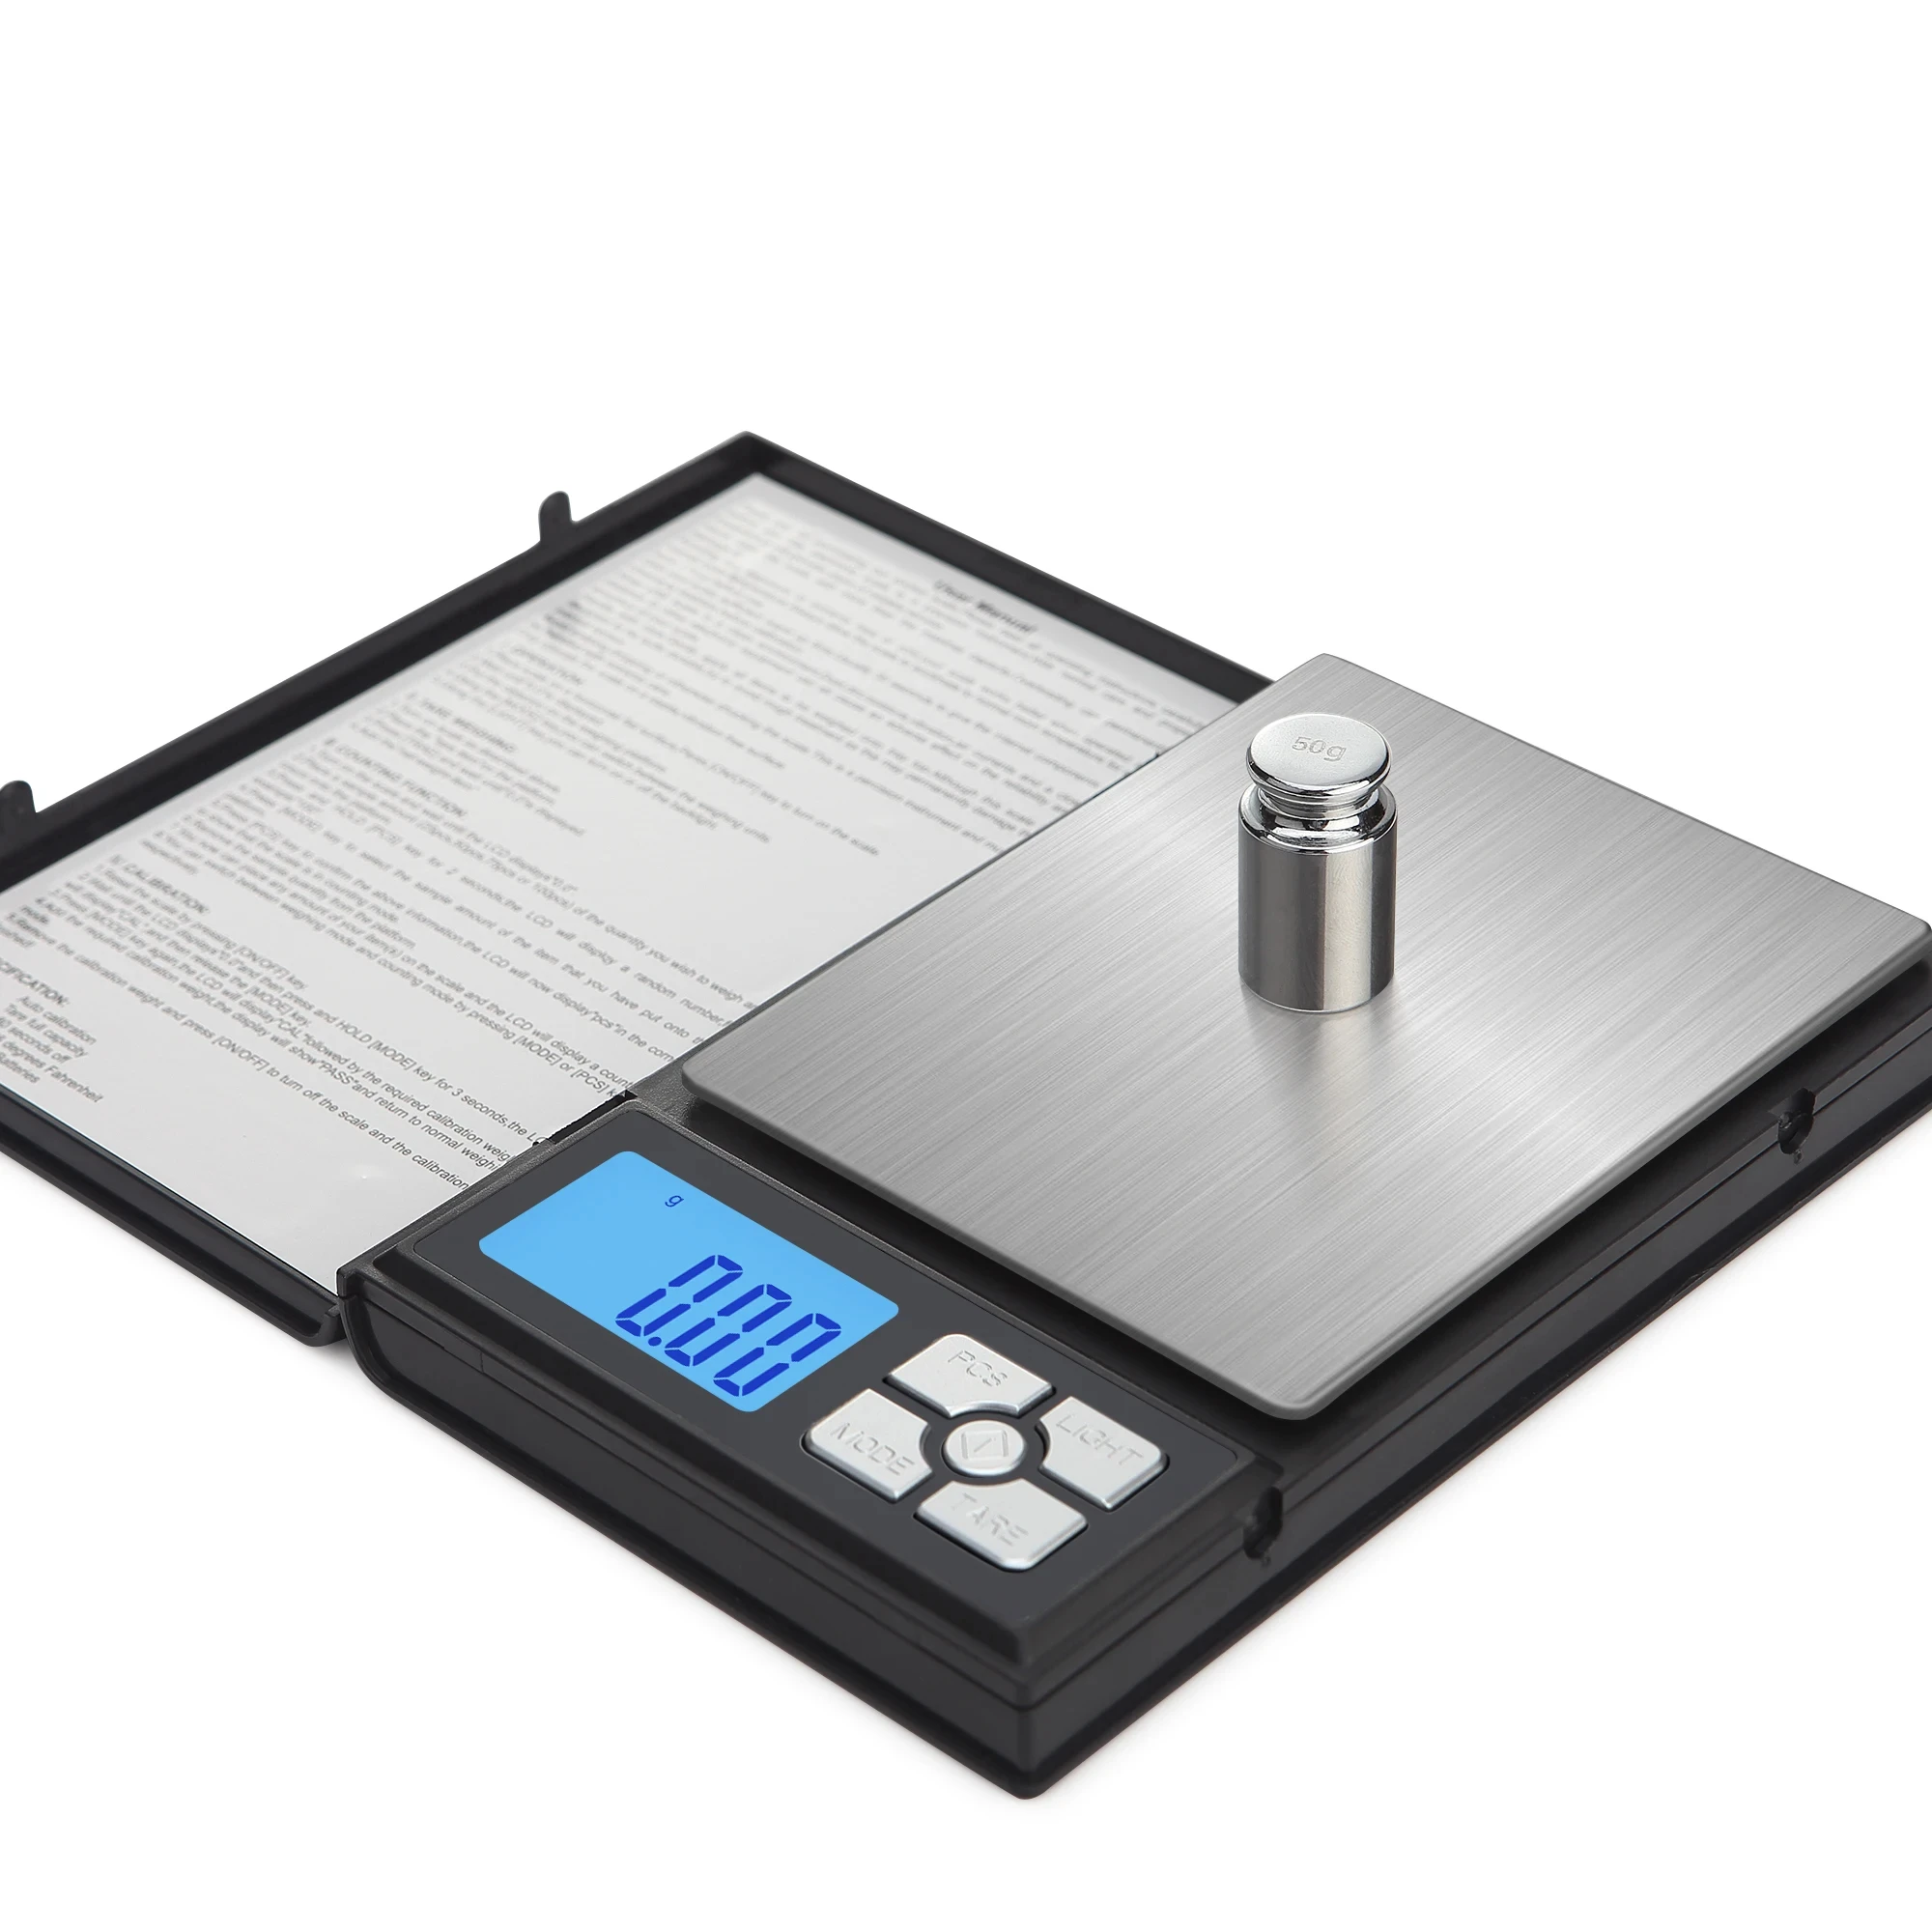 Weigh Gram Scale Digital Pocket Scale